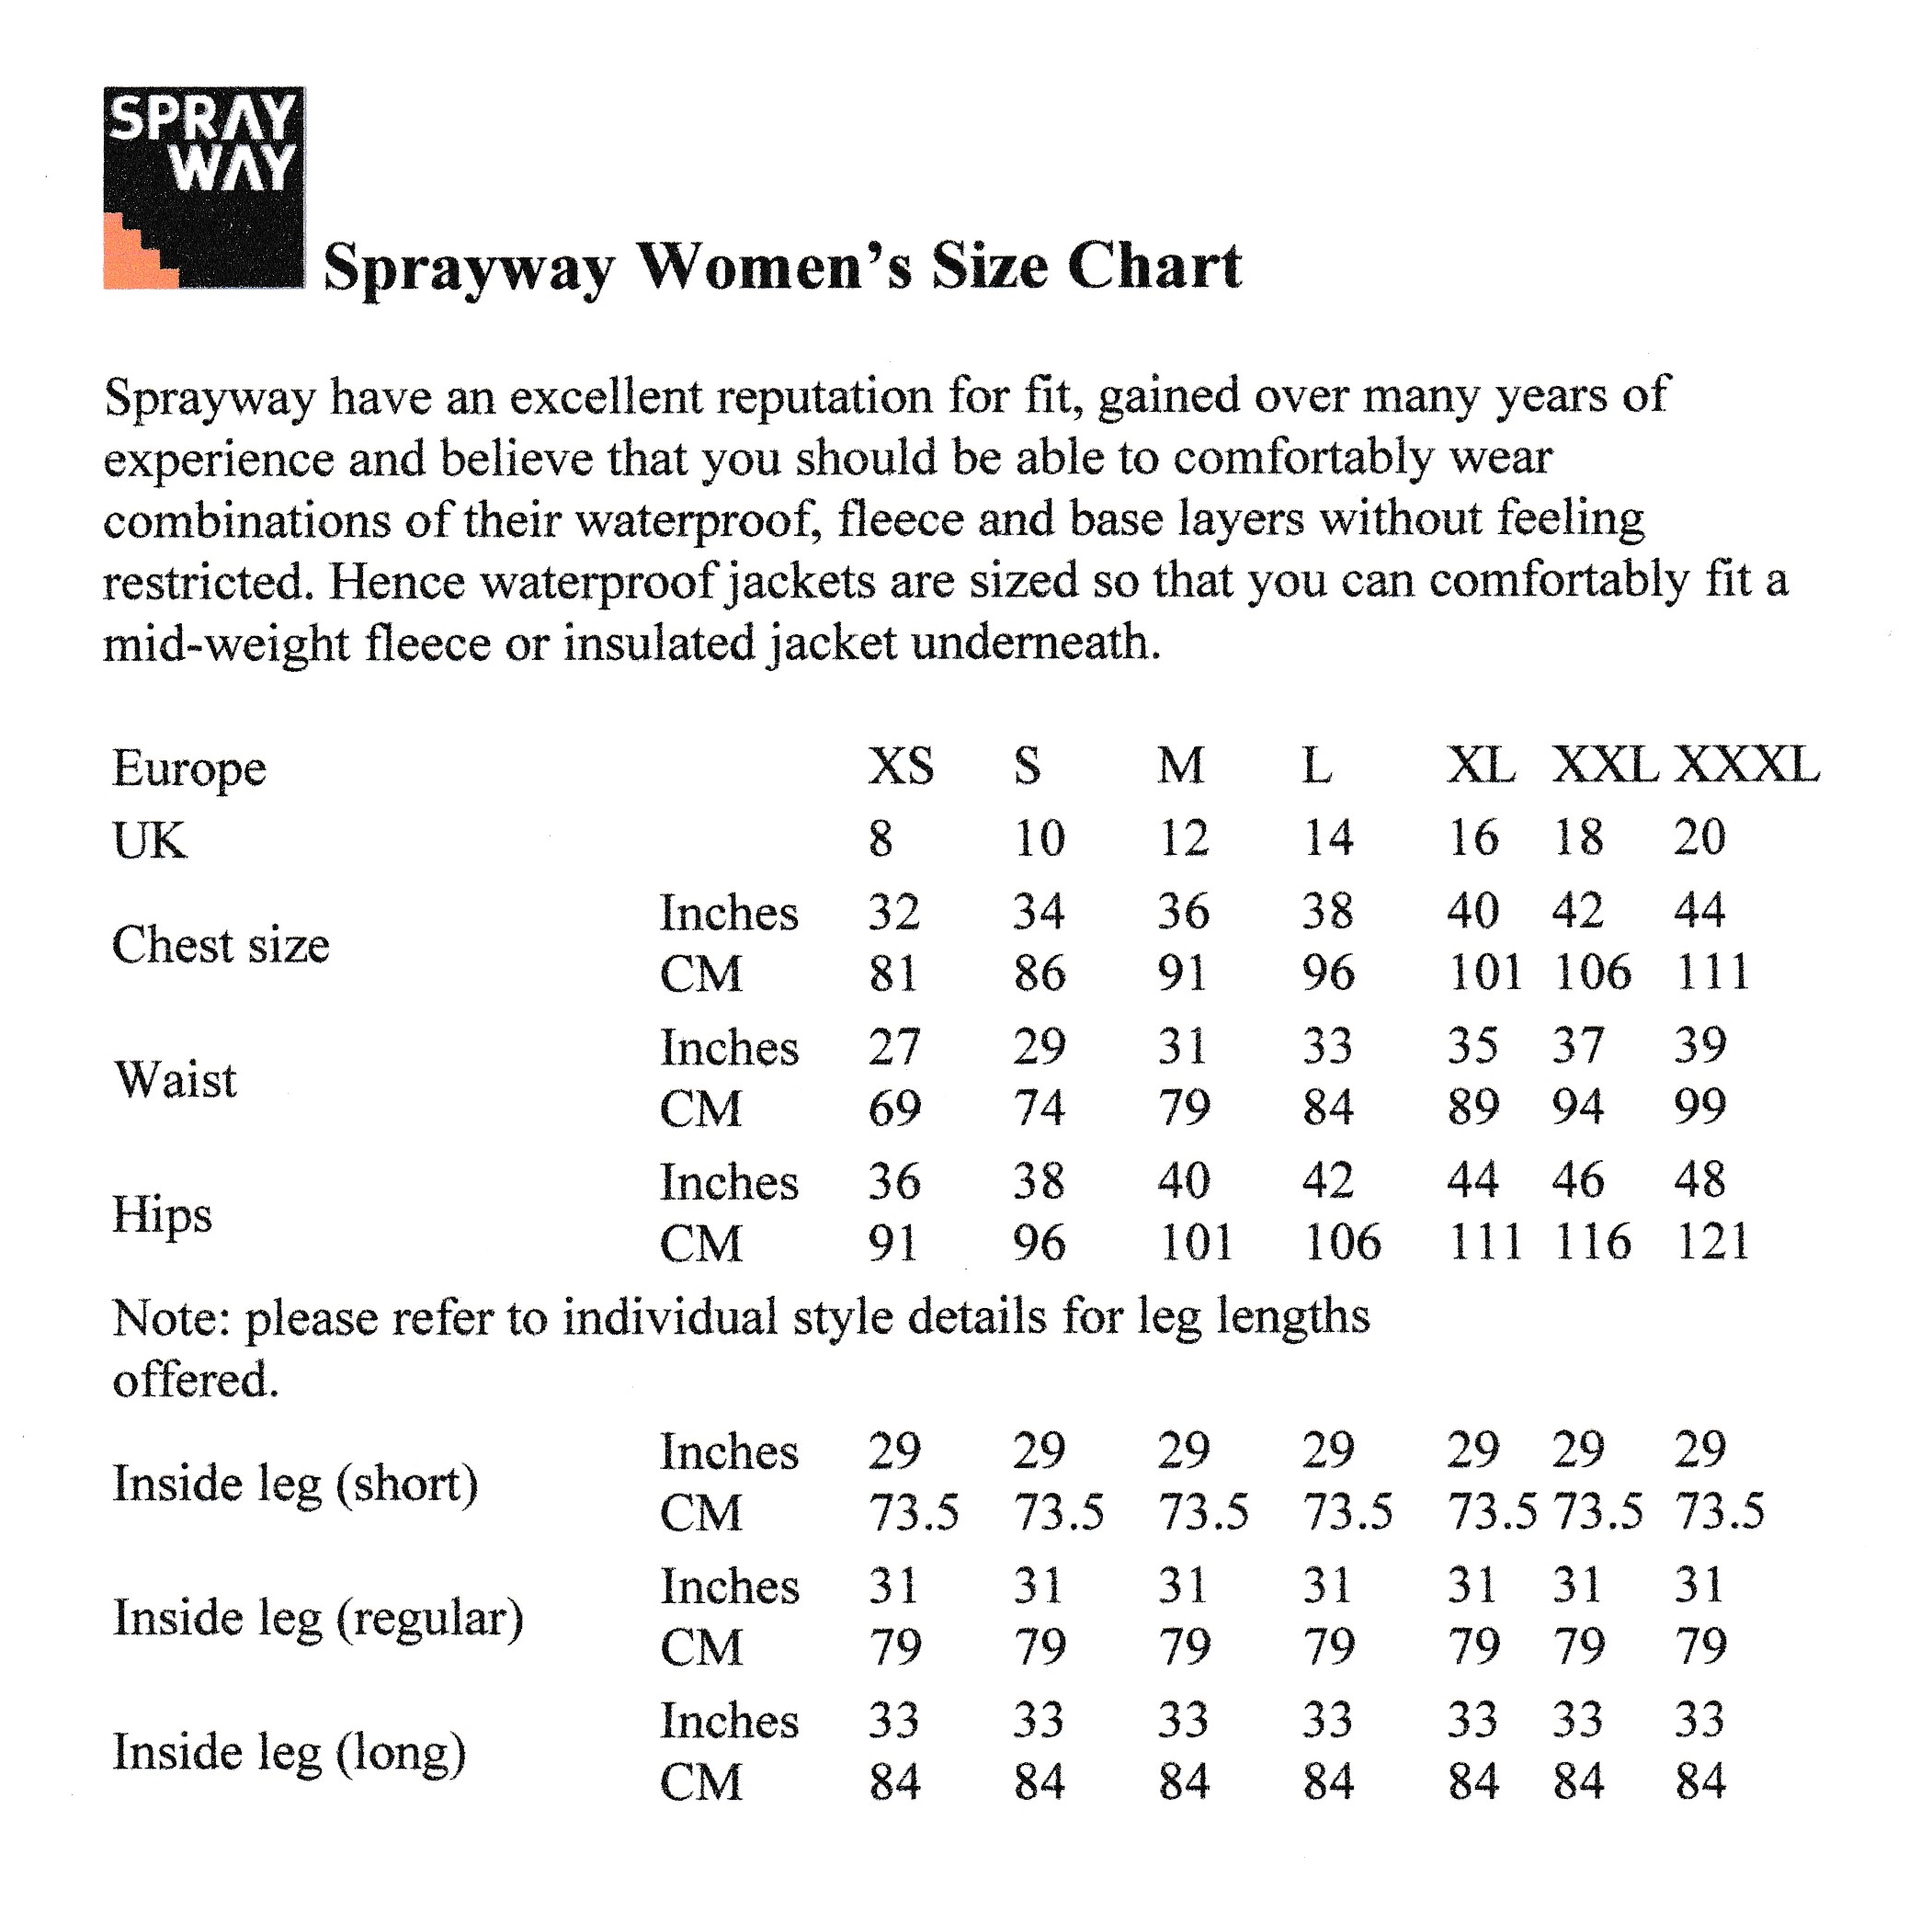 Sprayway Women's Size ChartA.jpg